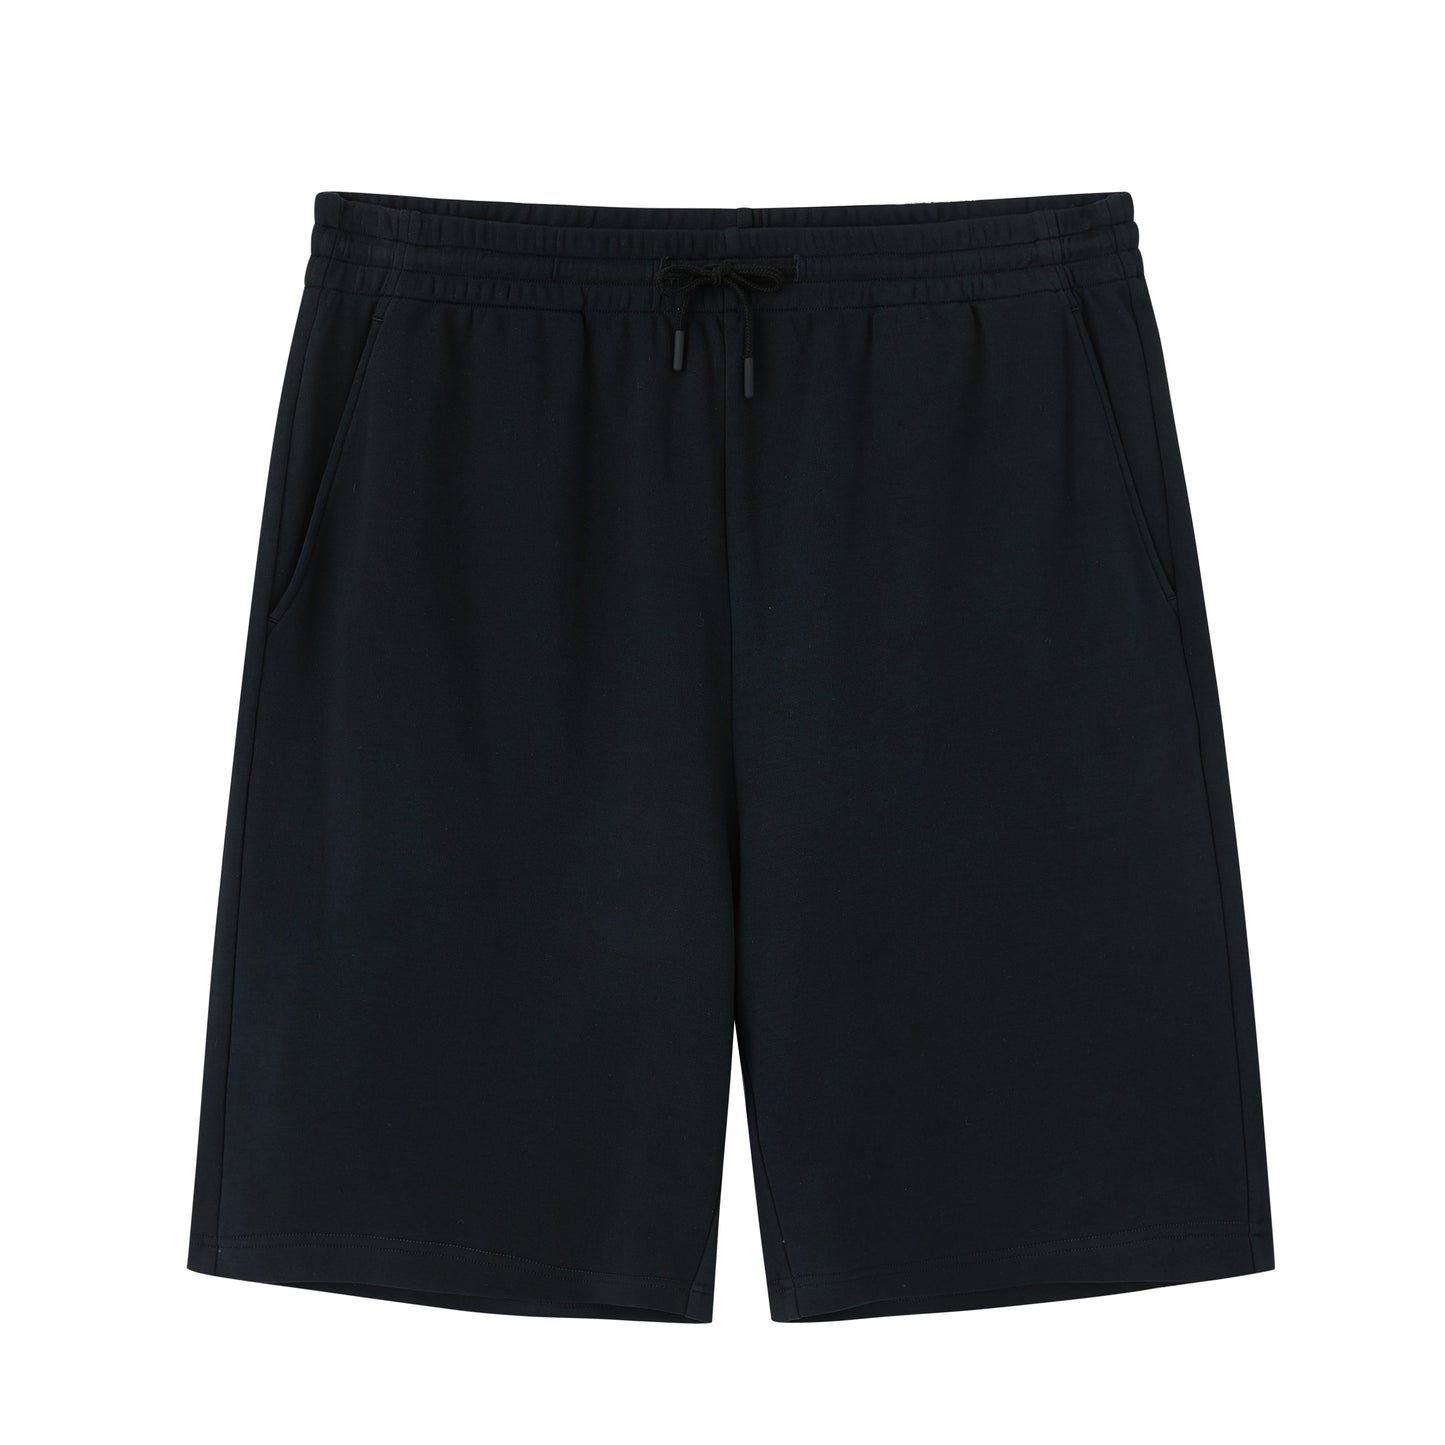 flat lay image of black shorts